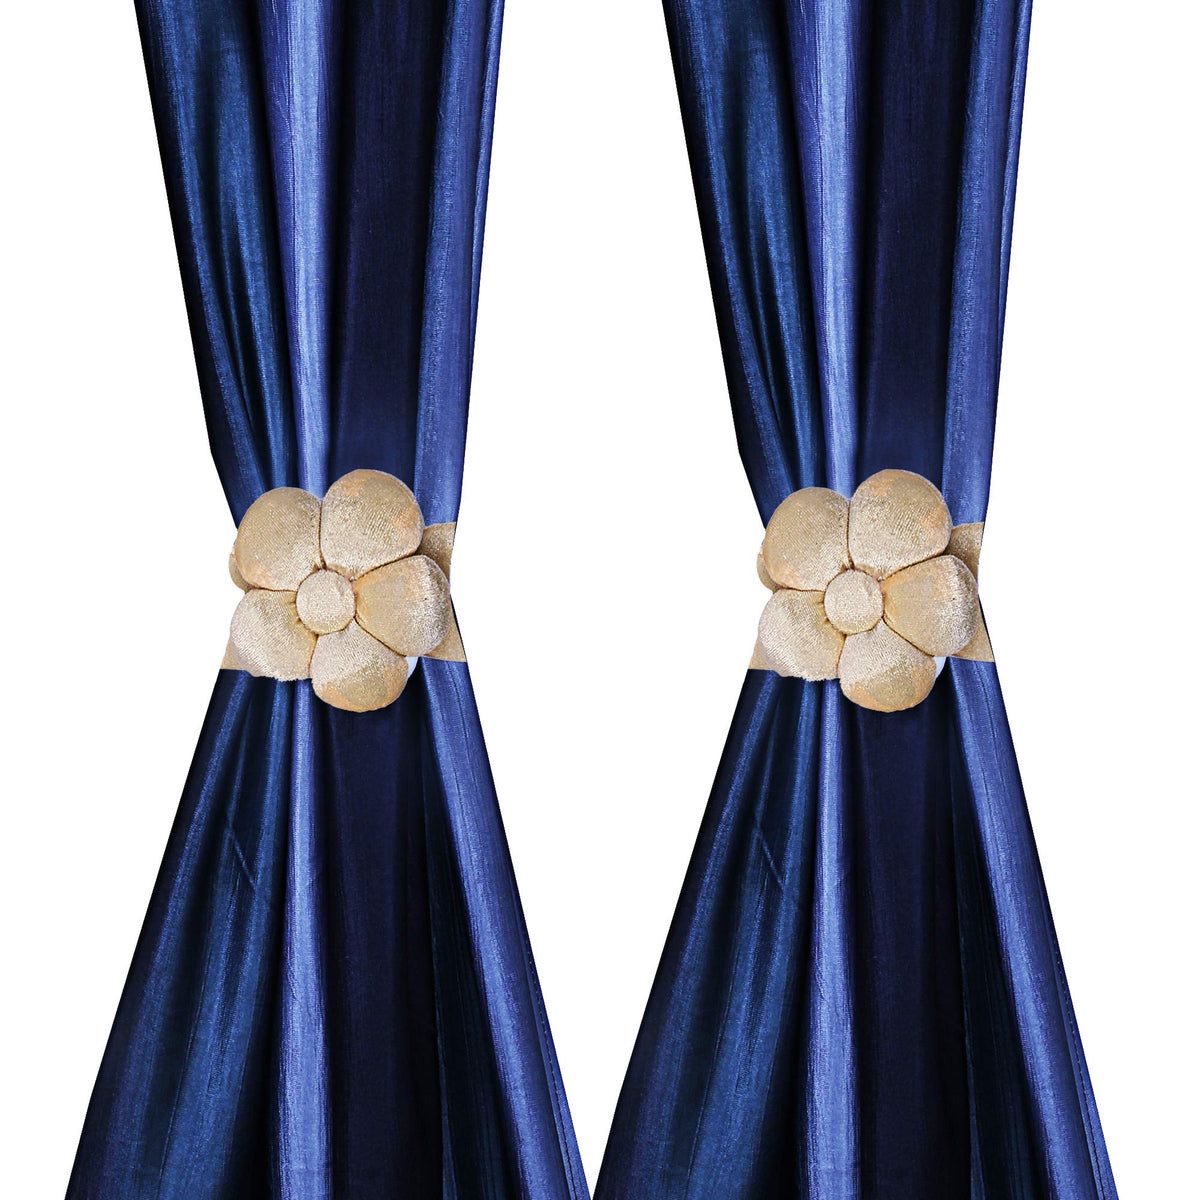 Kuber Industries Velvet 2 Pieces Curtain Tie Back Tassel Set (Gold), Standard (CTKTC024102)